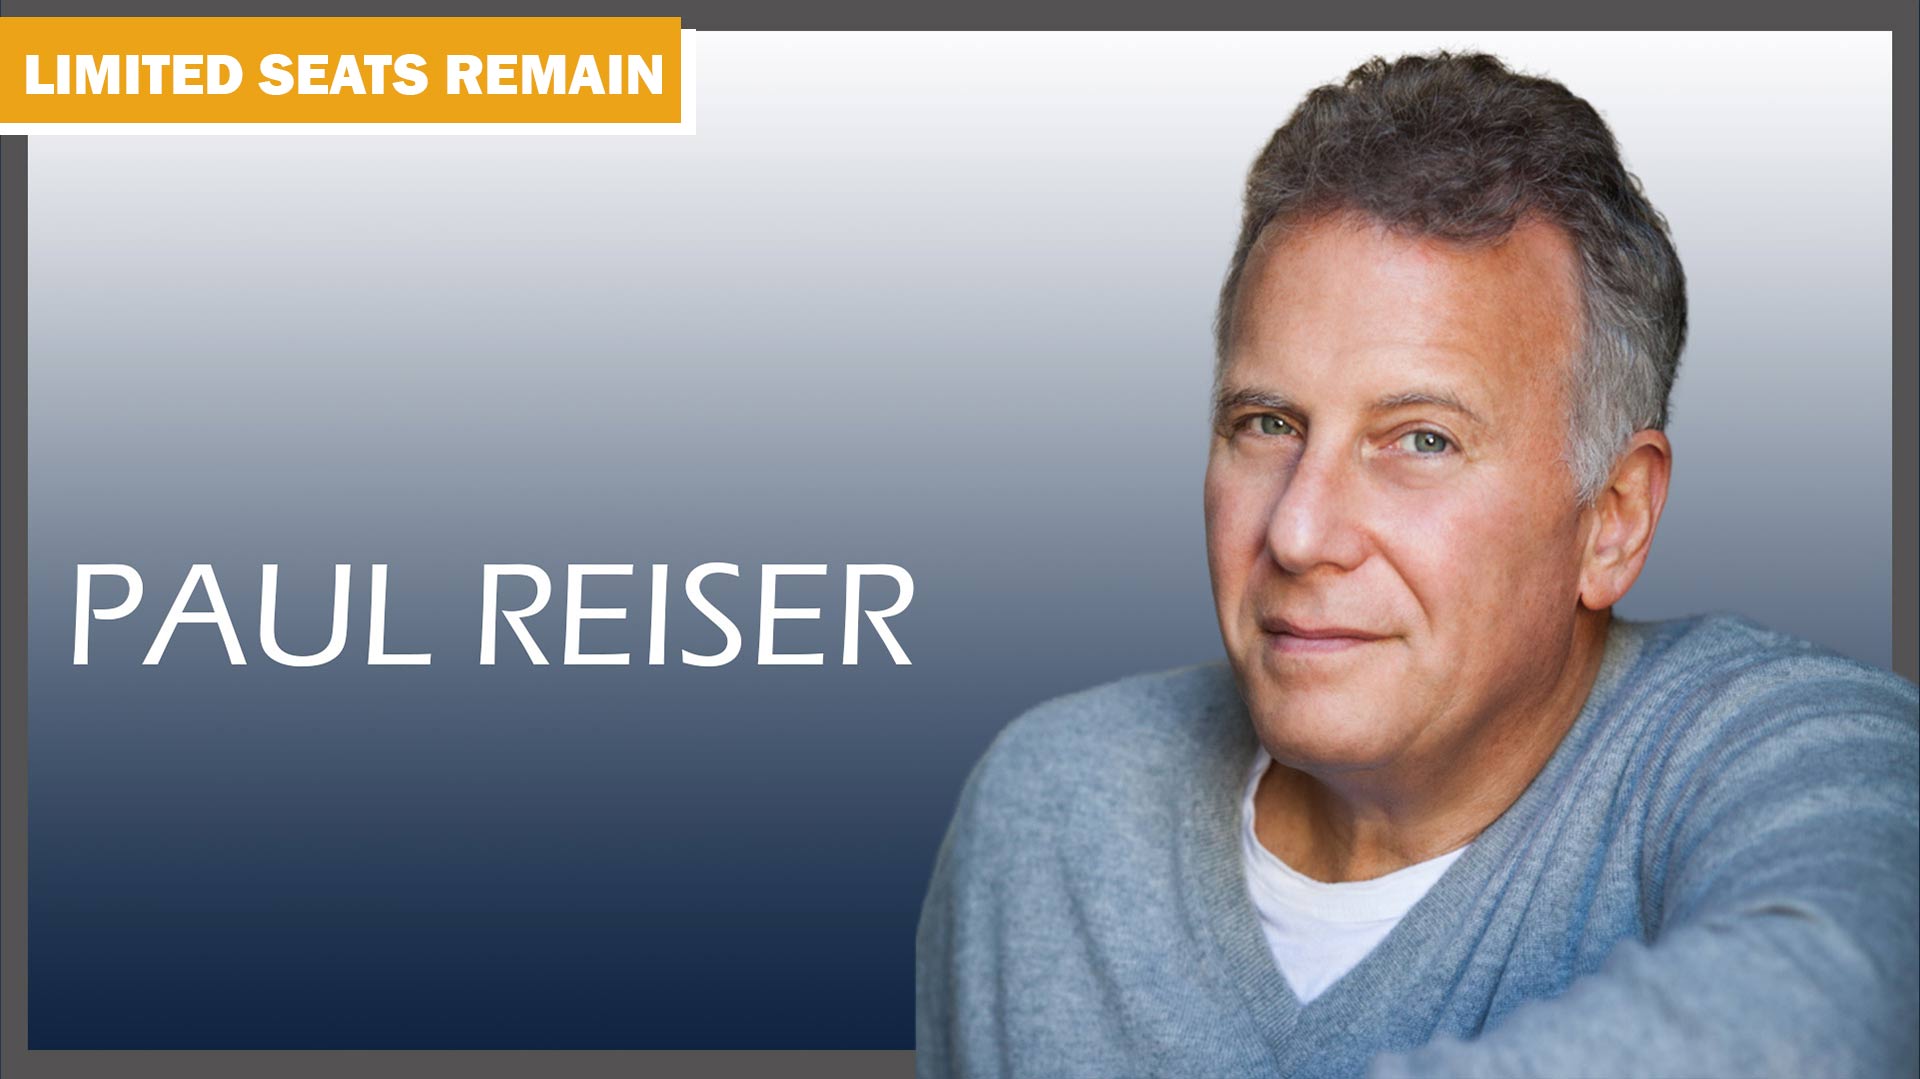 Paul Reiser Limited Seating